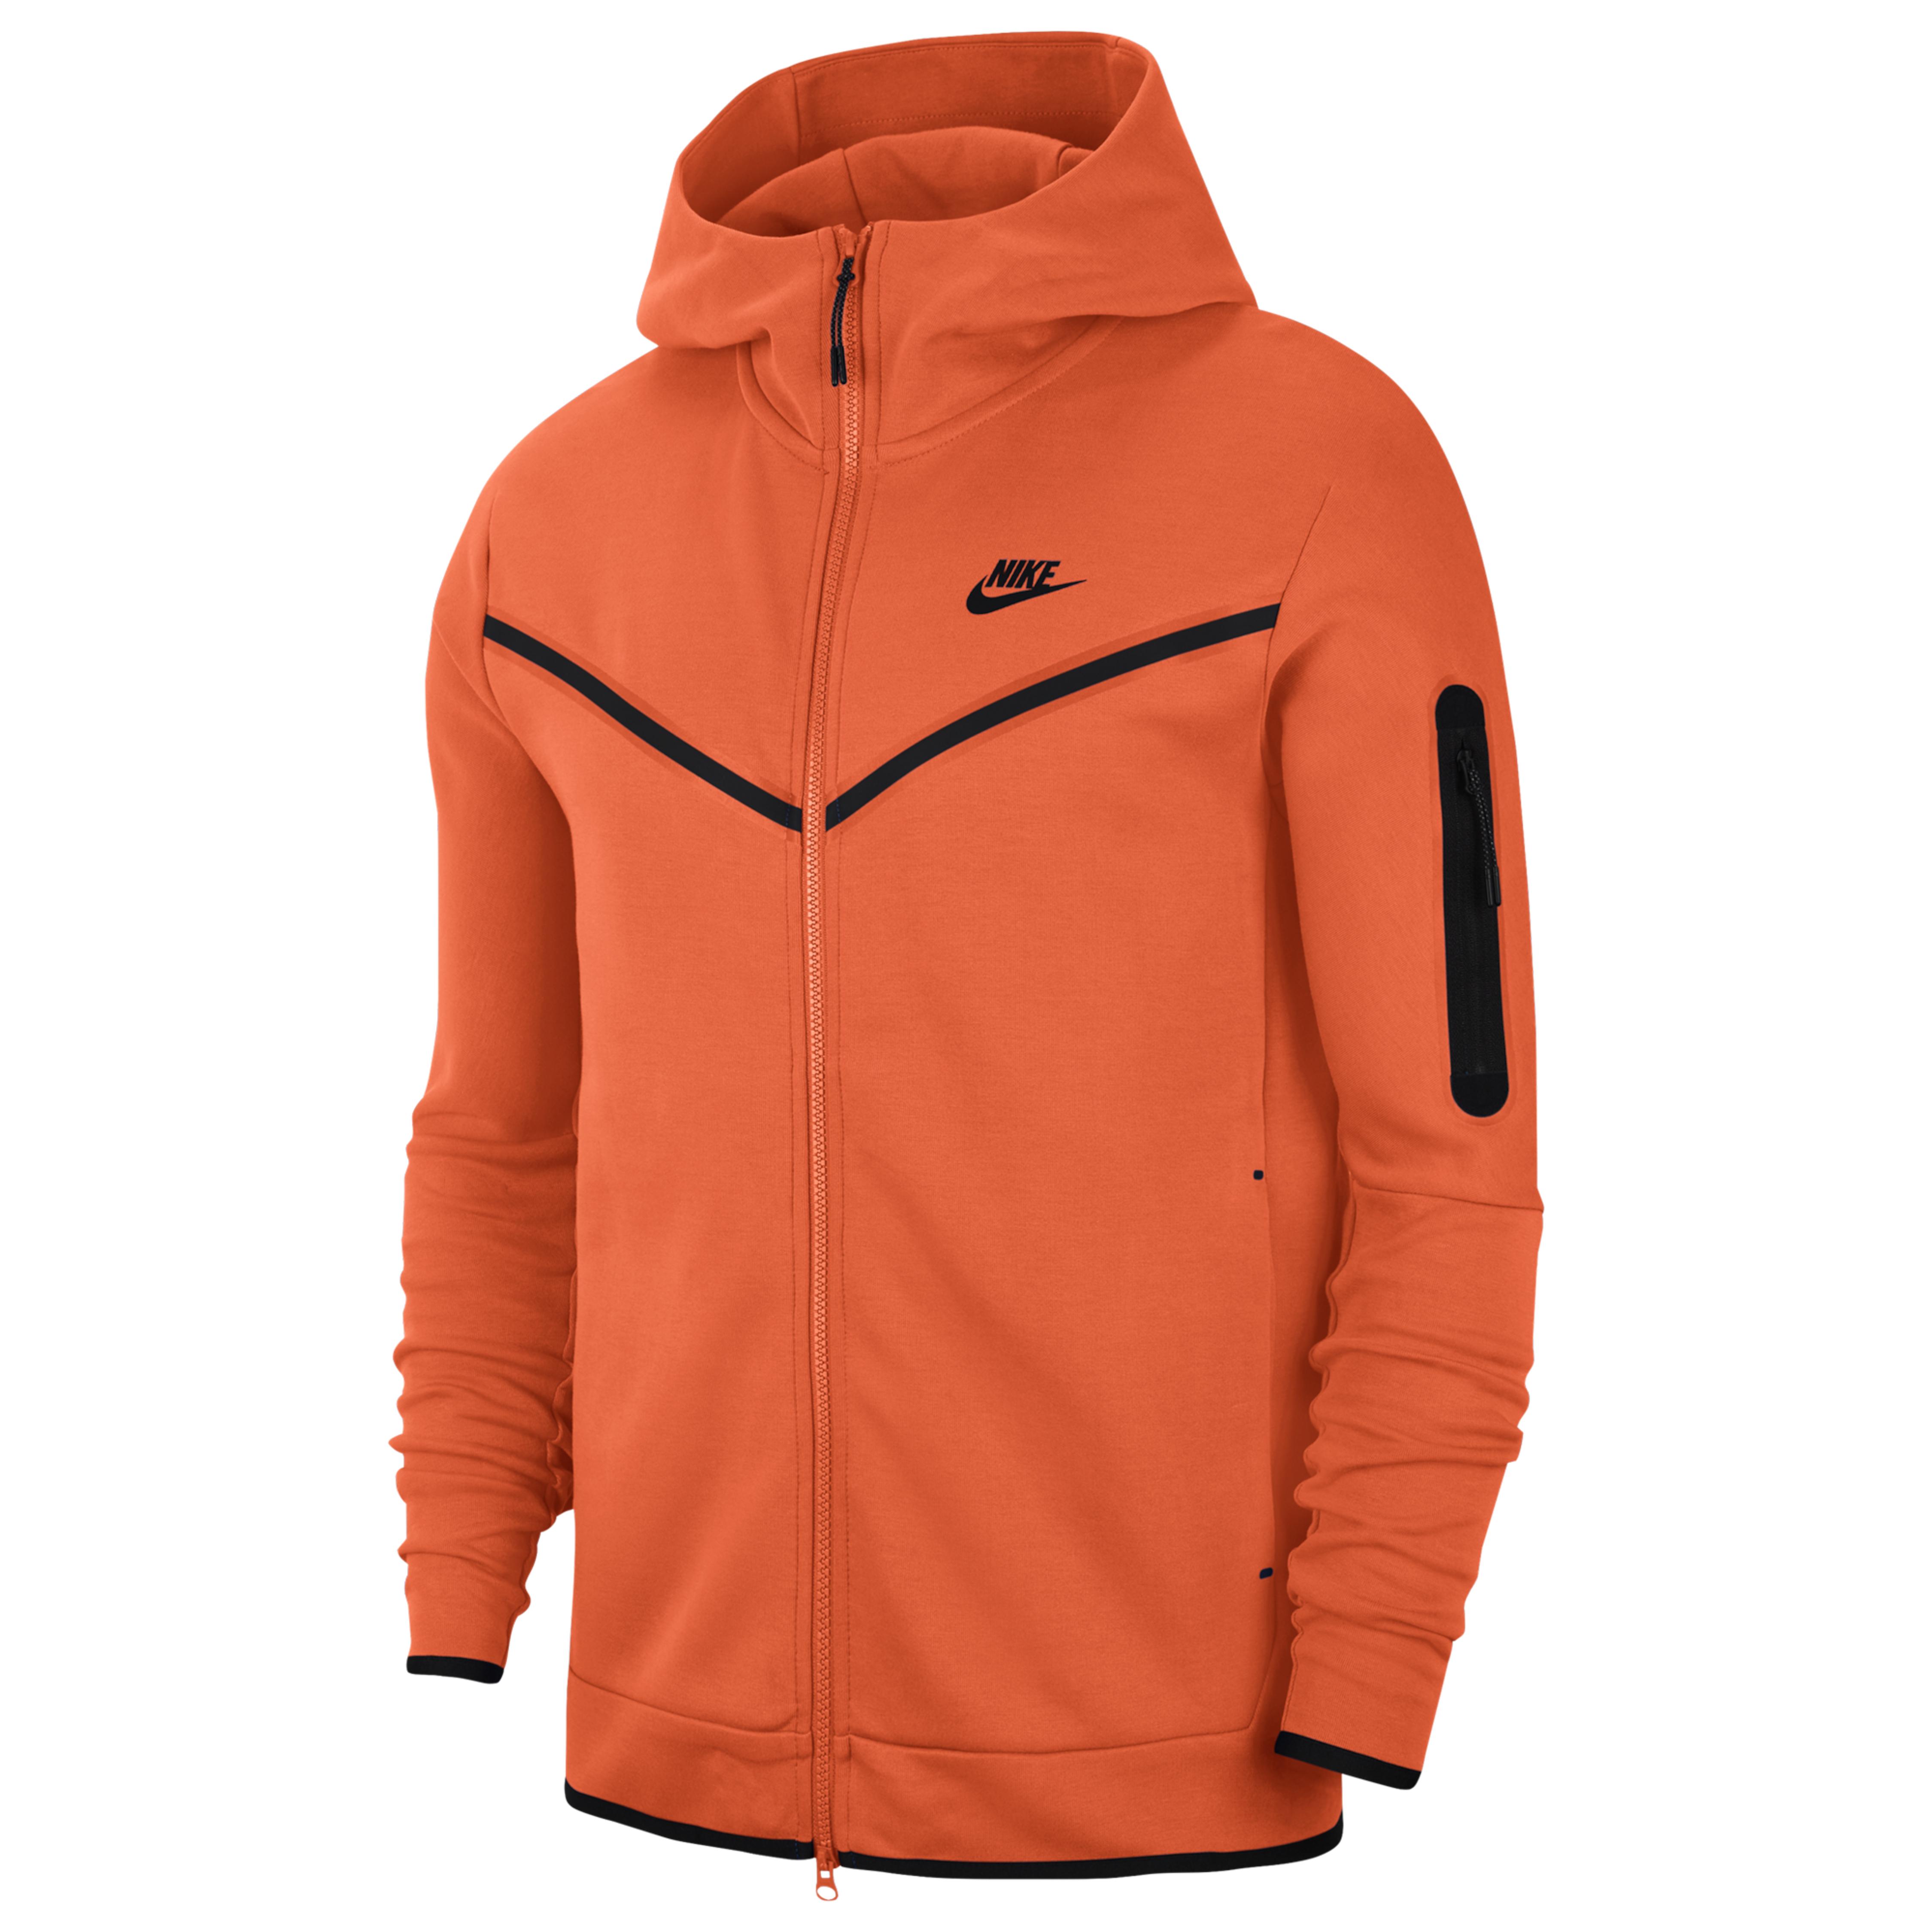 Nike Tech Fleece Full-zip Hoodie in Orange for Men - Lyst